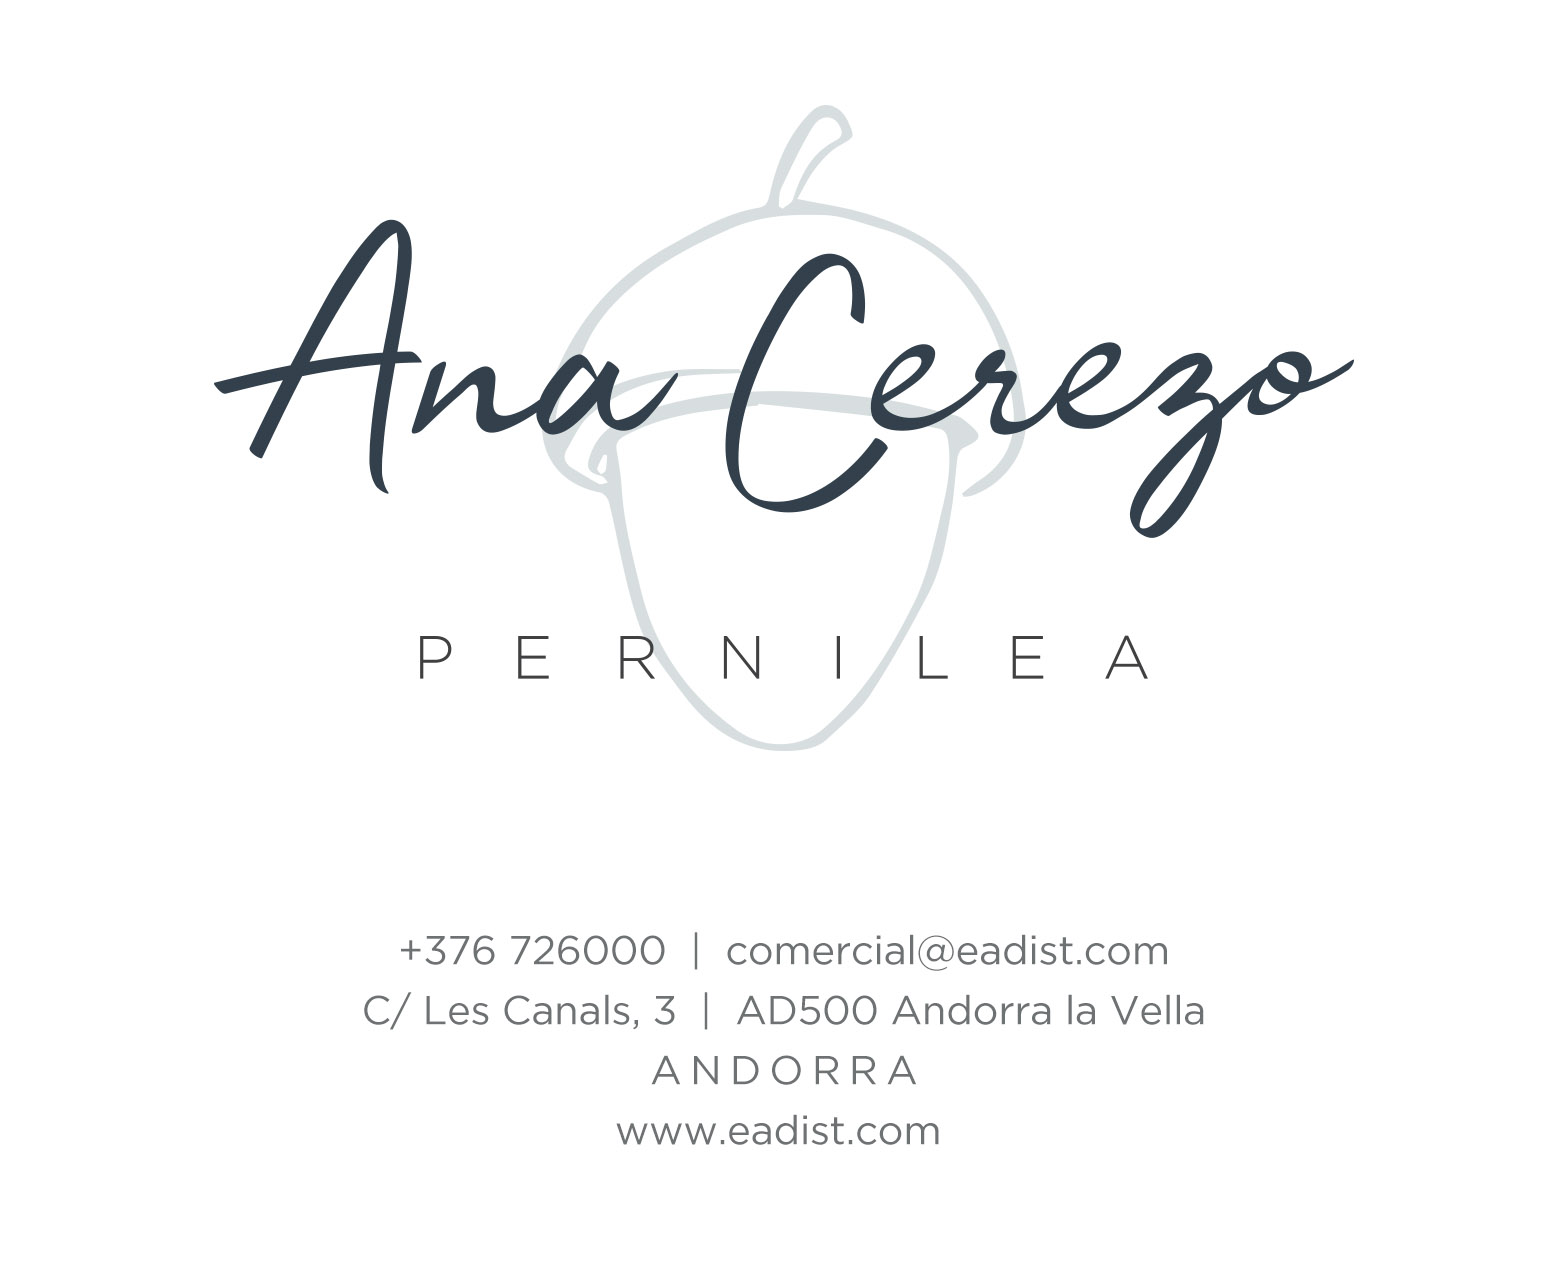 EA! Pernilea - Ana Cerezo